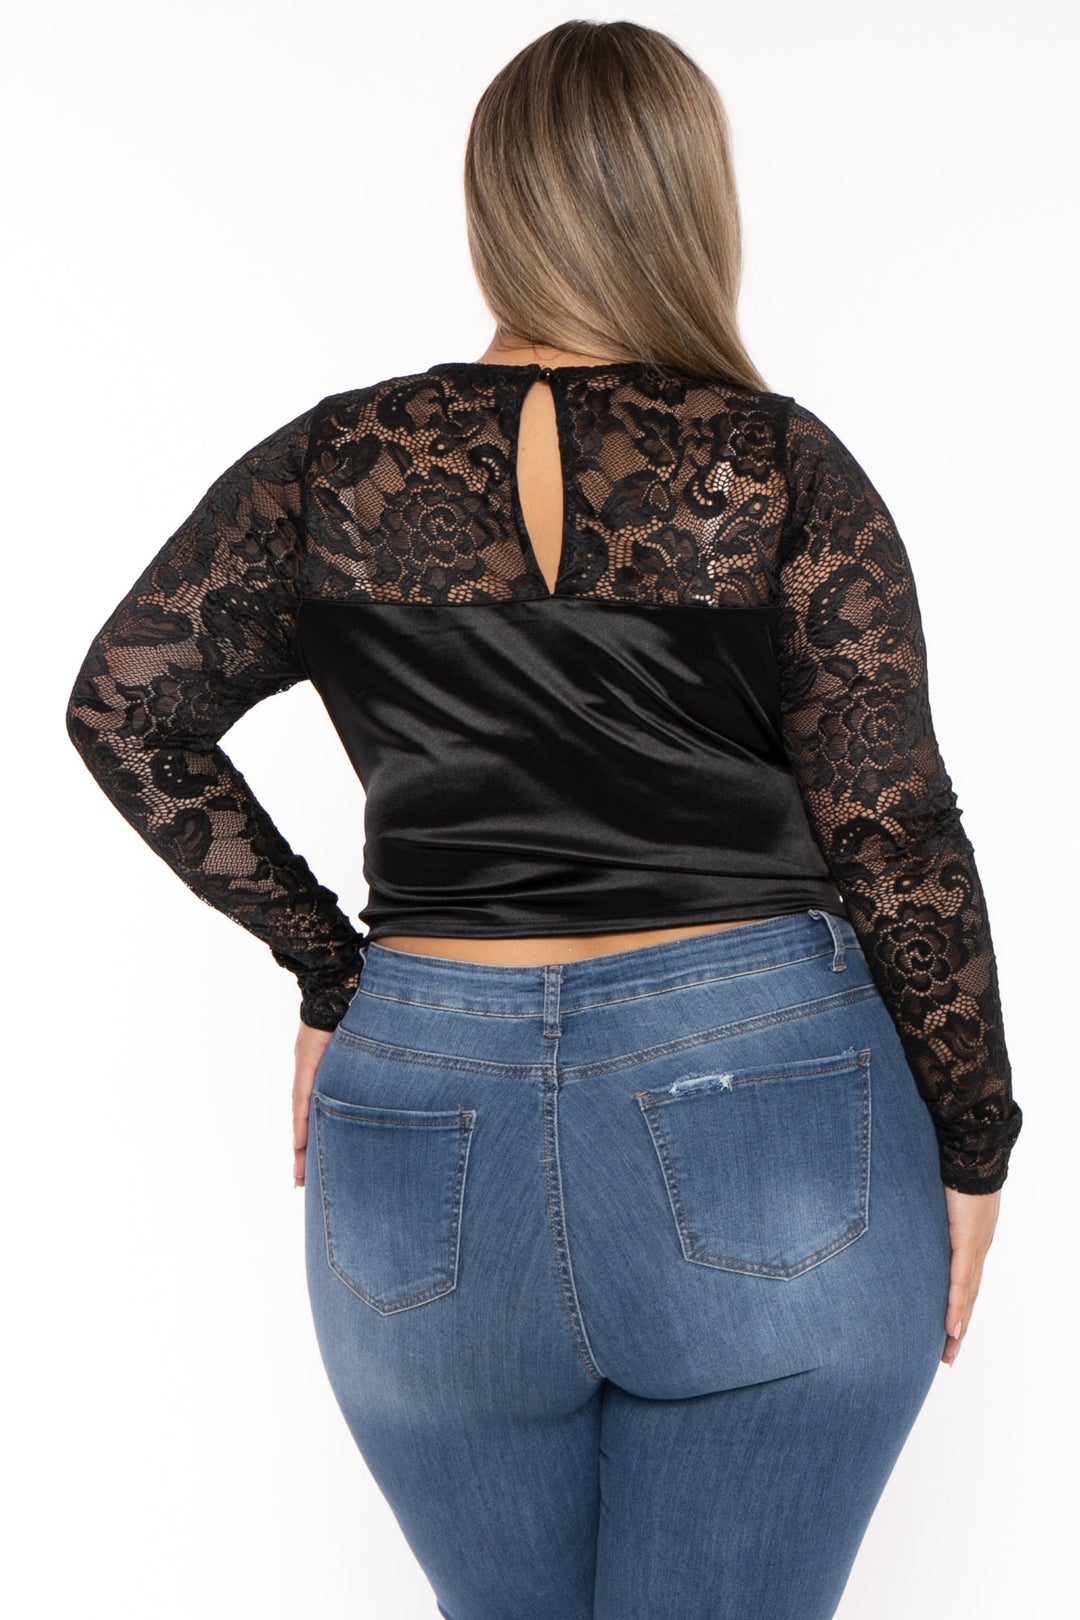 Curvy Sense Tops Plus Size Leisa  Lace Top- Black